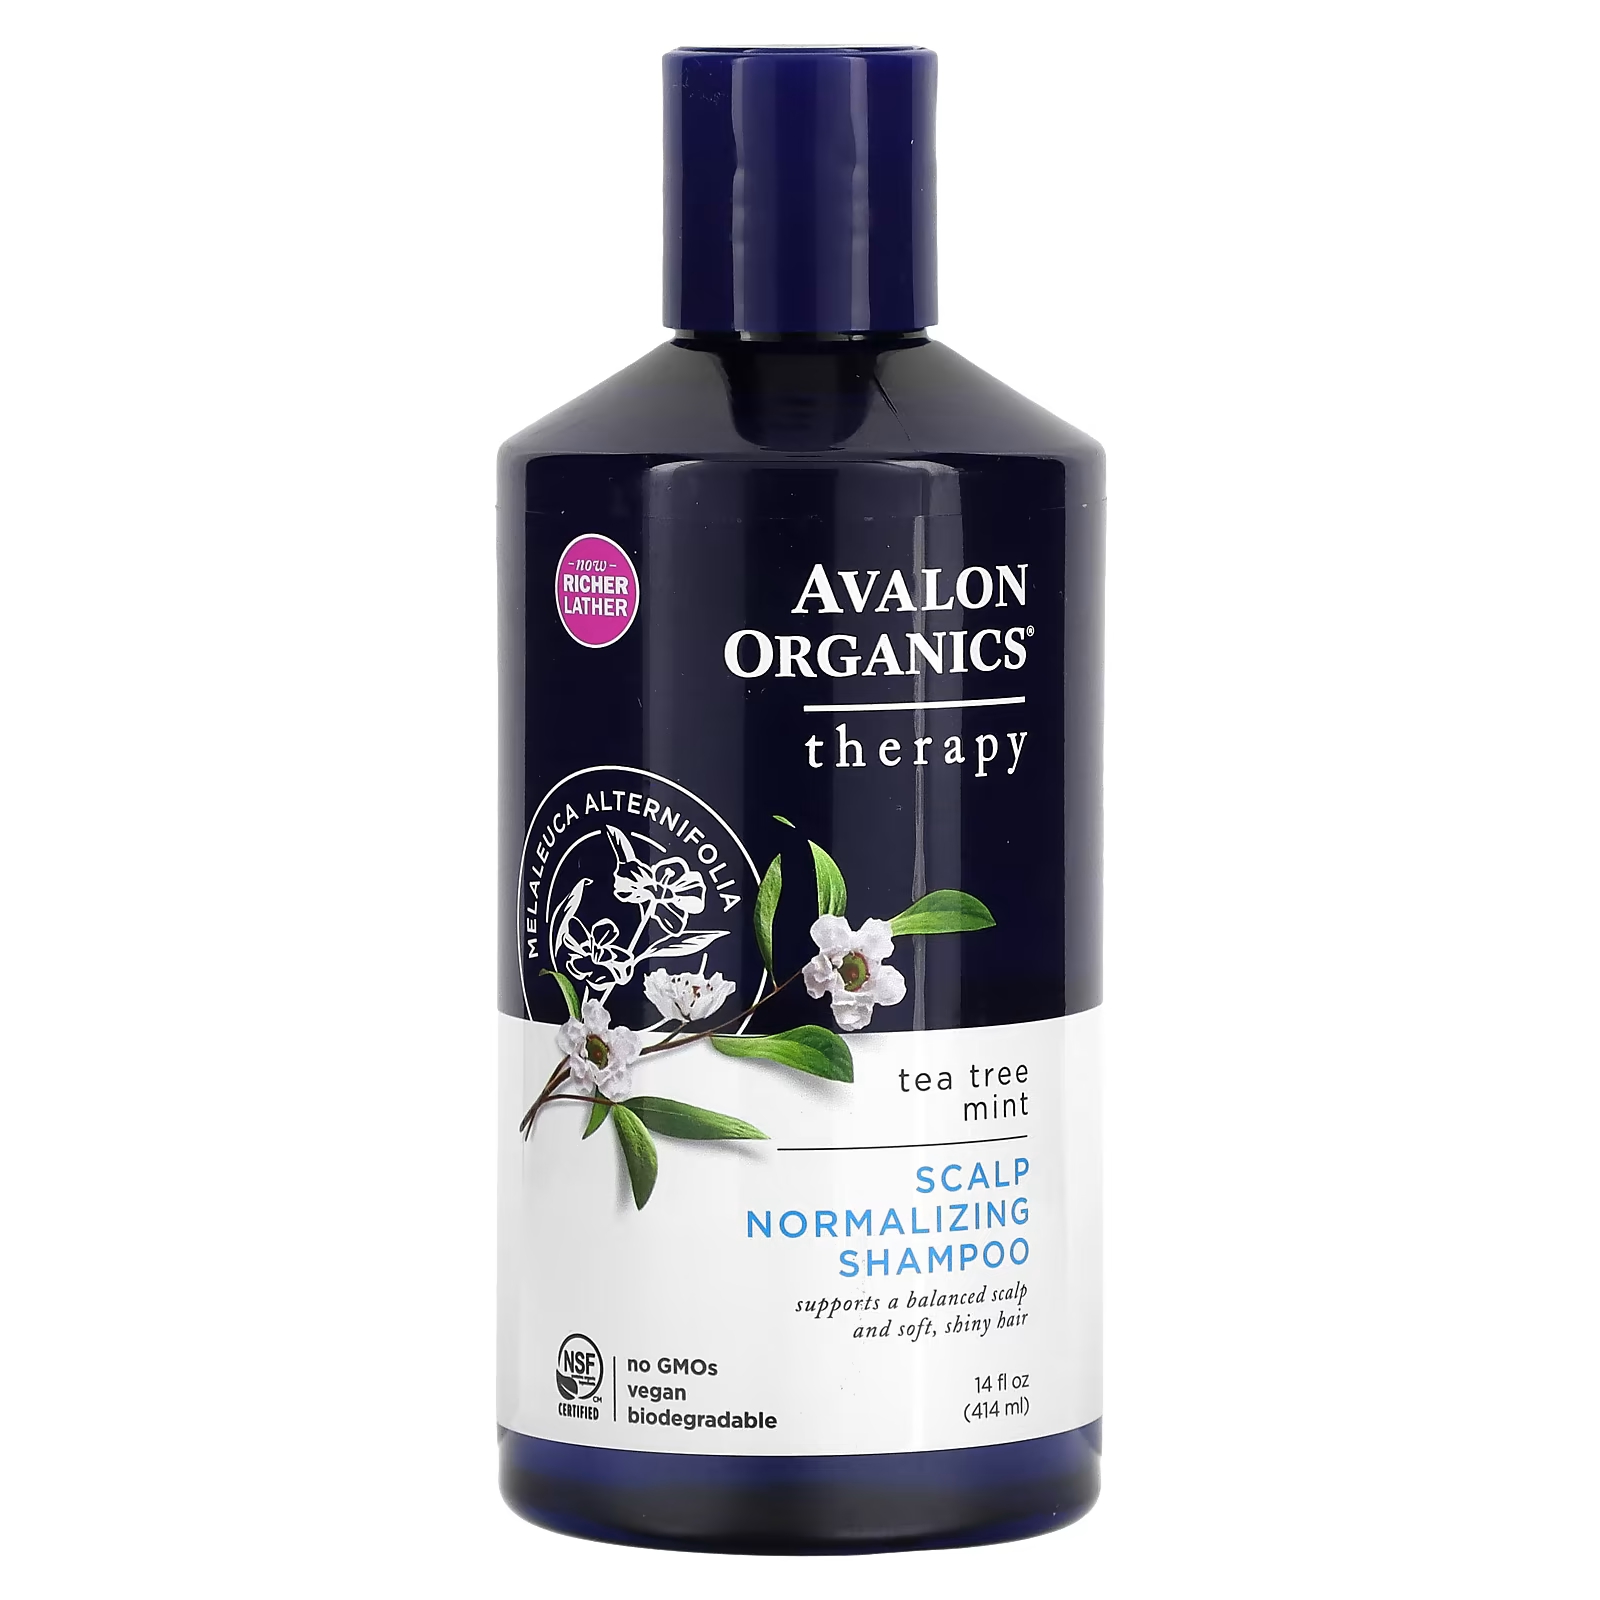 Шампунь Avalon Organics Therapy Scalp Normalizing Tea Tree Mint, 414 мл шампунь против перхоти avalon organics chamomilla recutita 414 мл